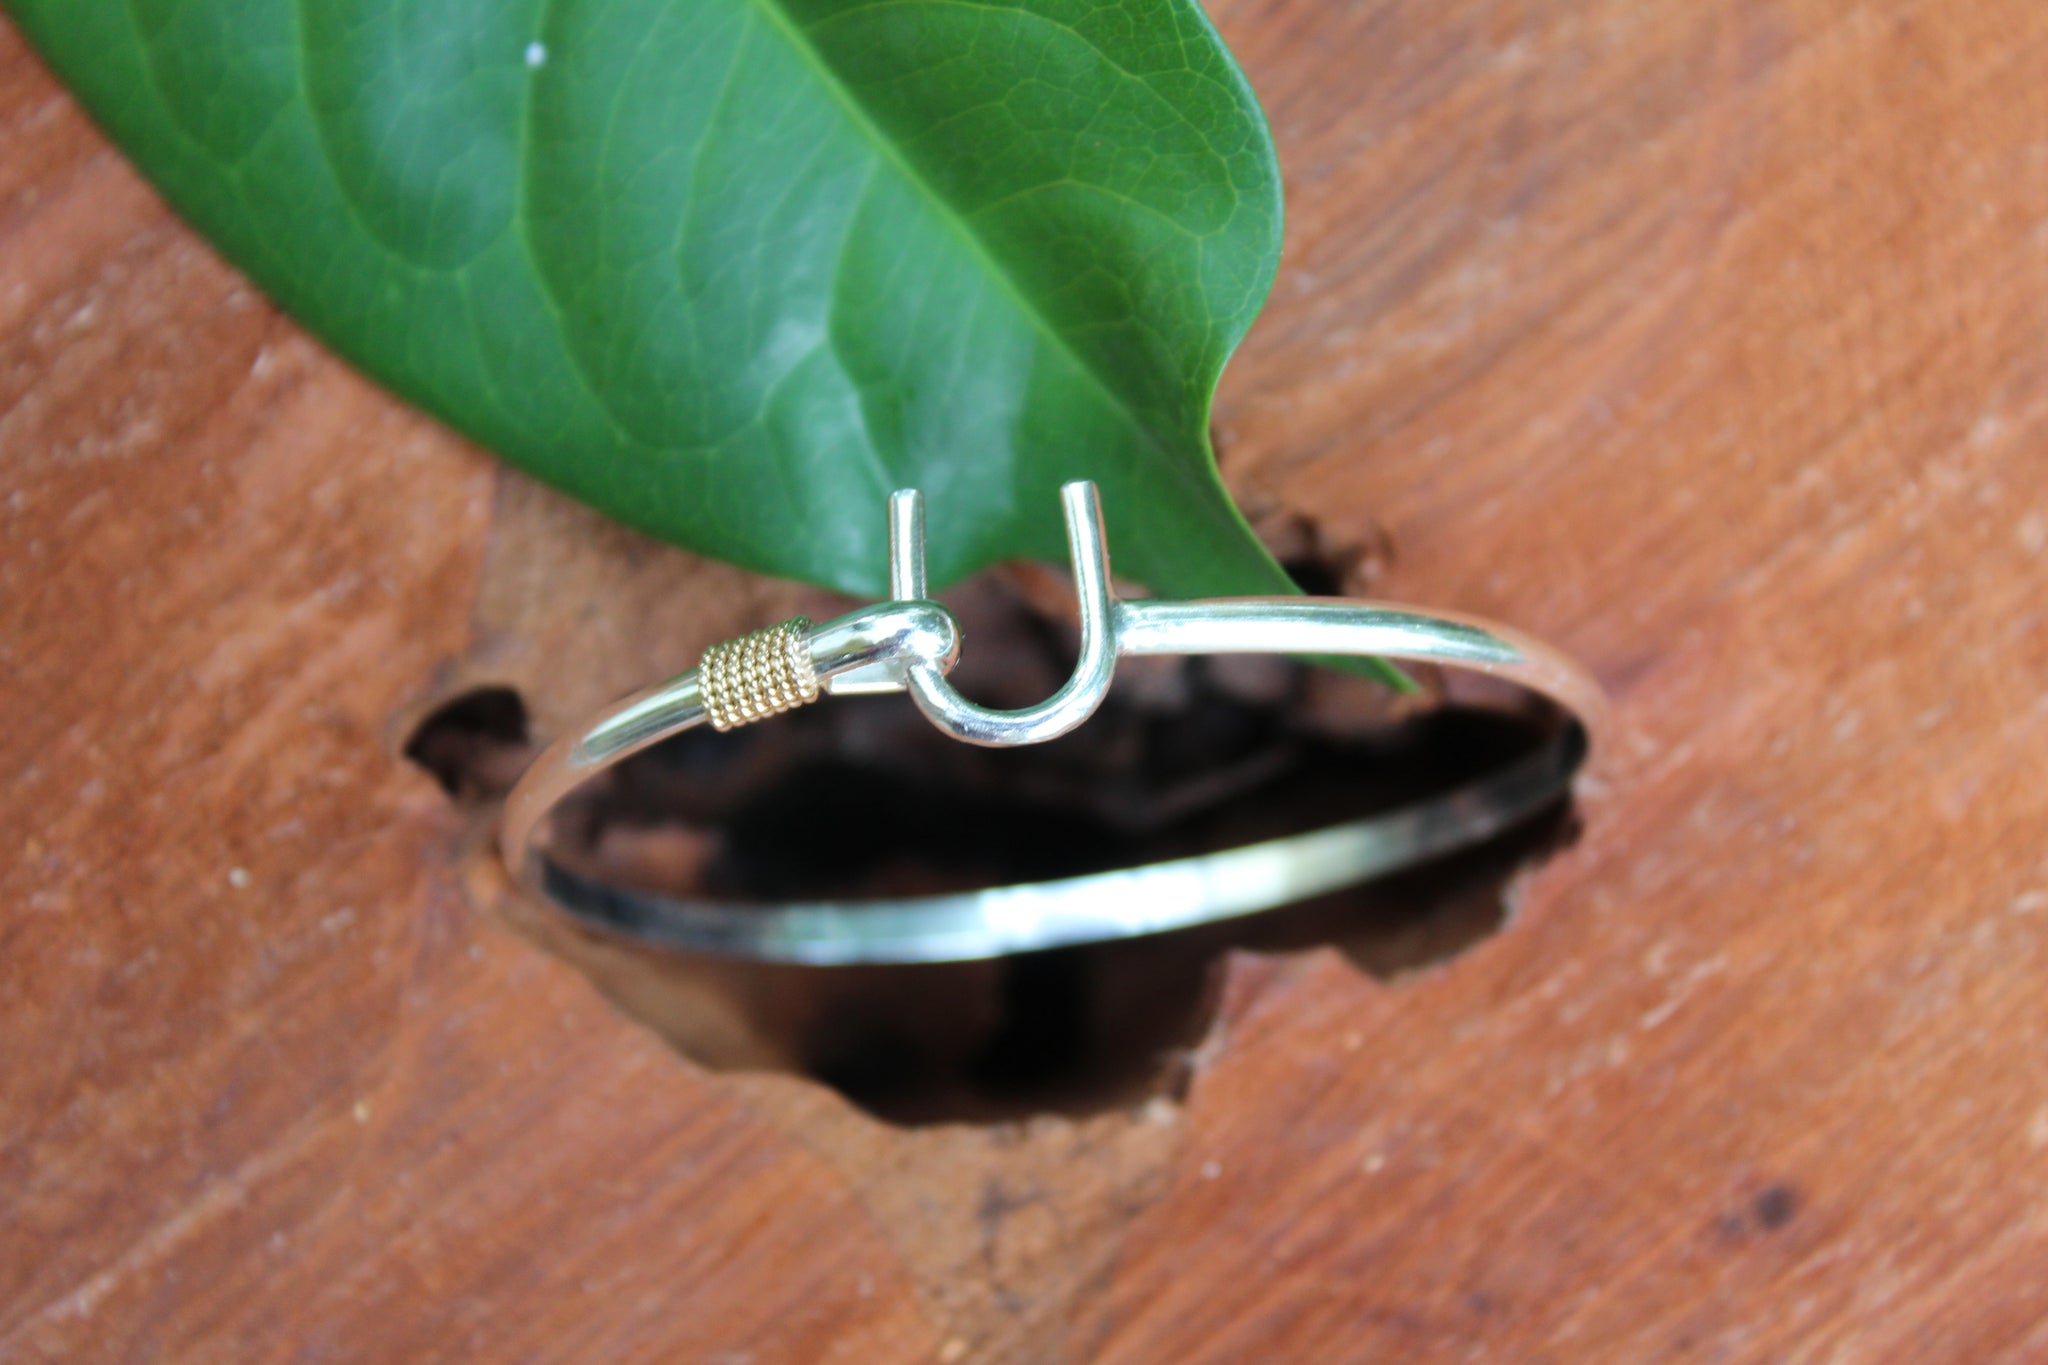 3mm Crucian Hook Bracelet – RJS Handmade Designs